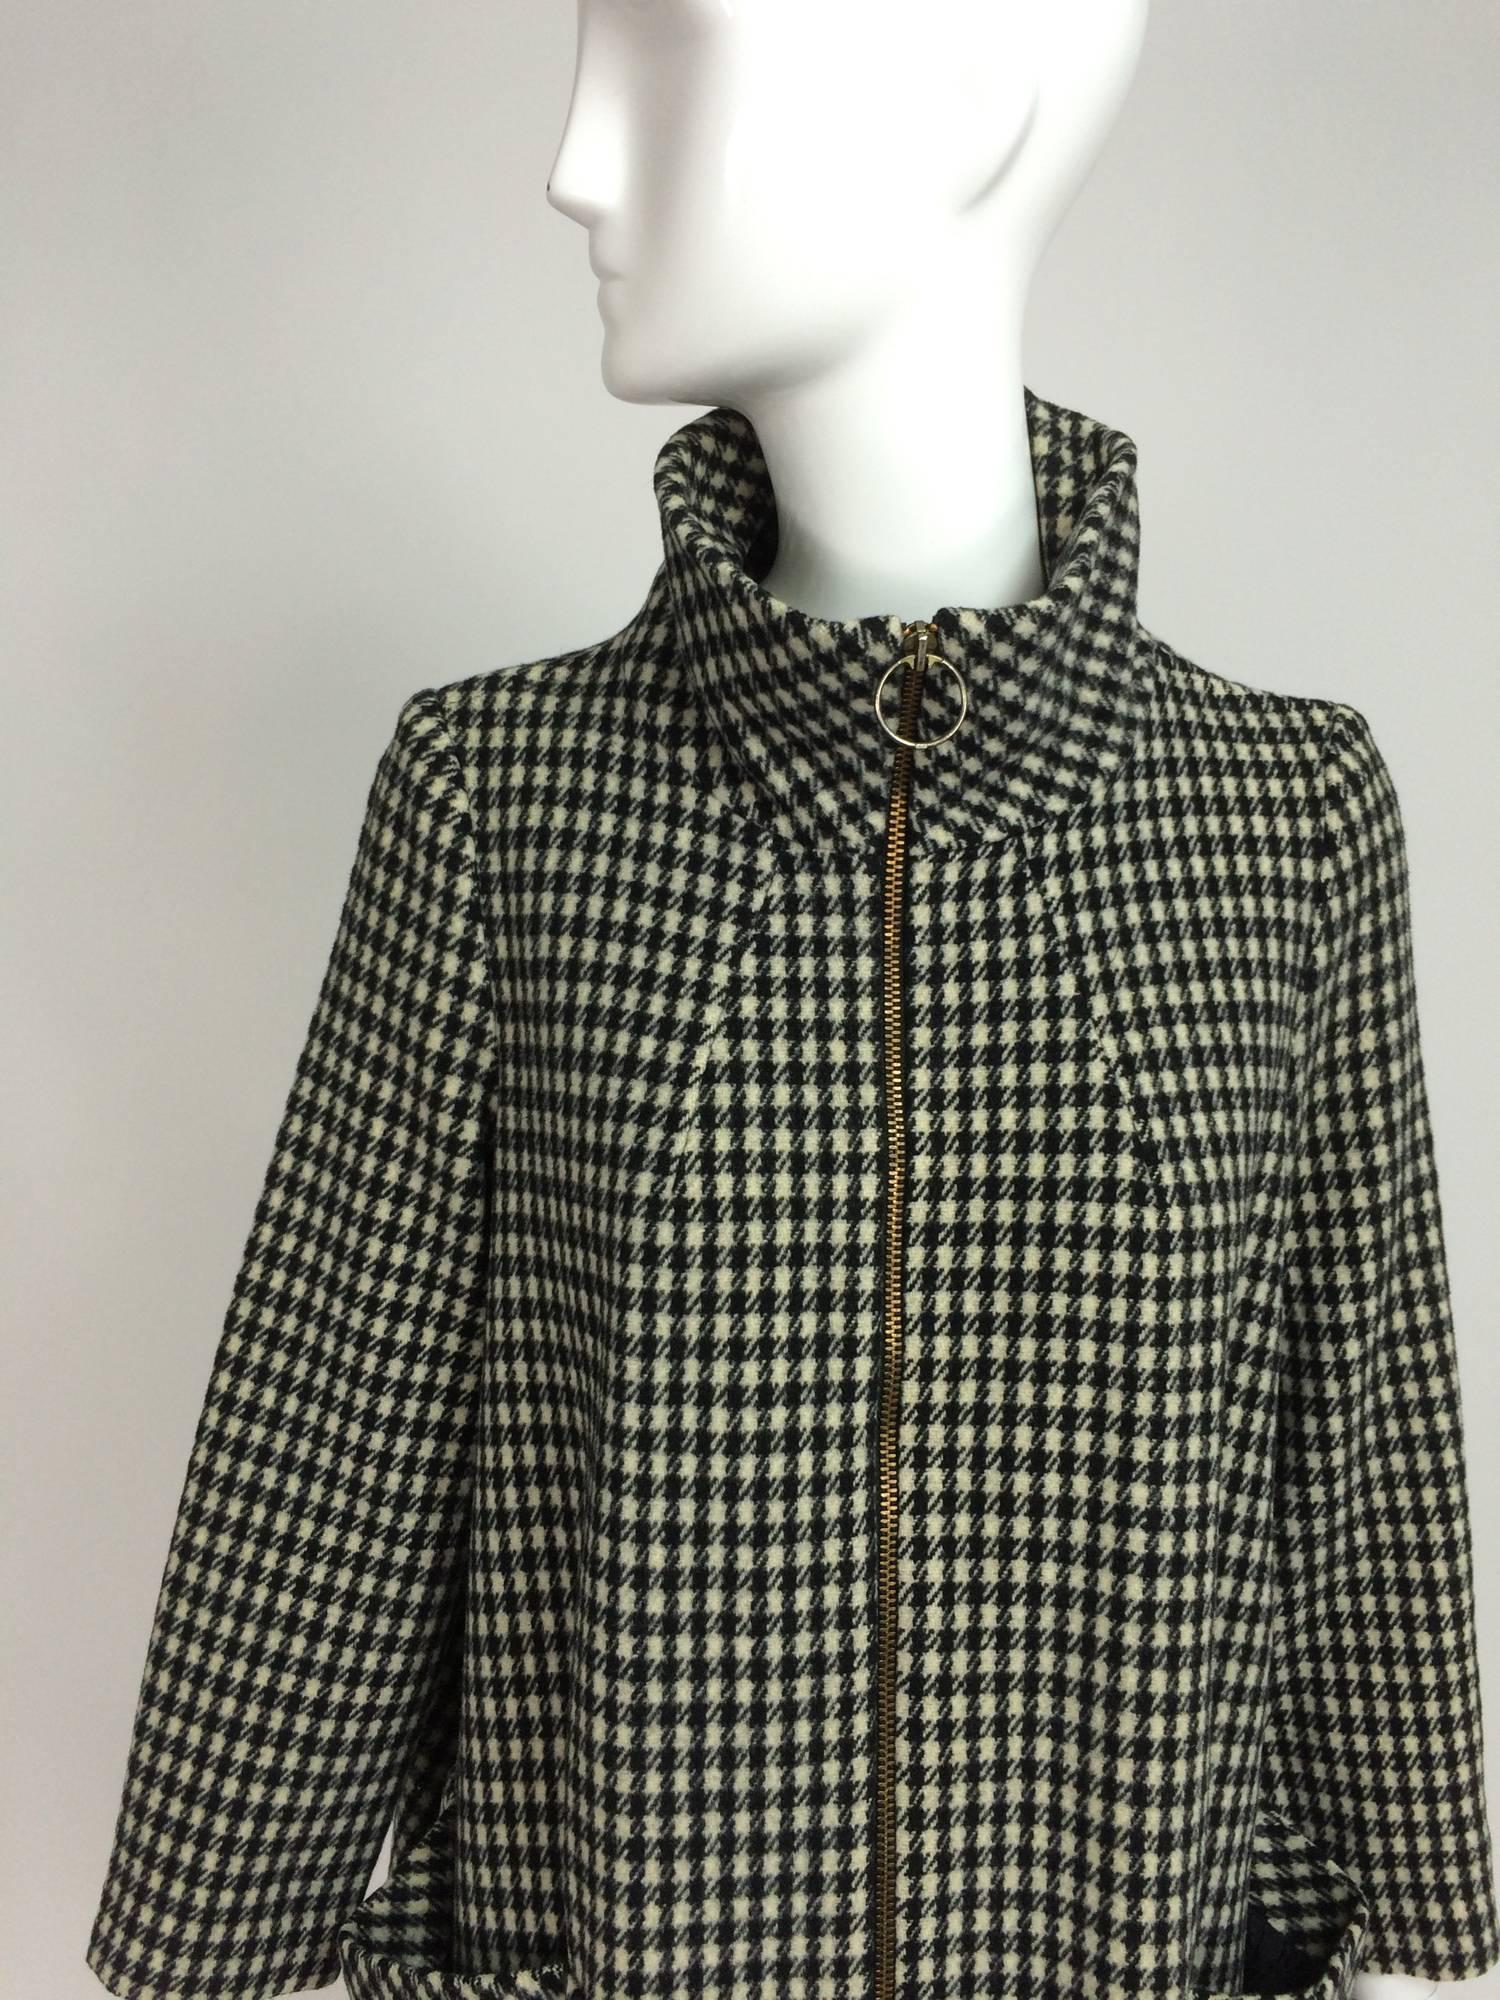 Women's Mod black & white check zip front mini tent coat 1960s Jordan Marsh England